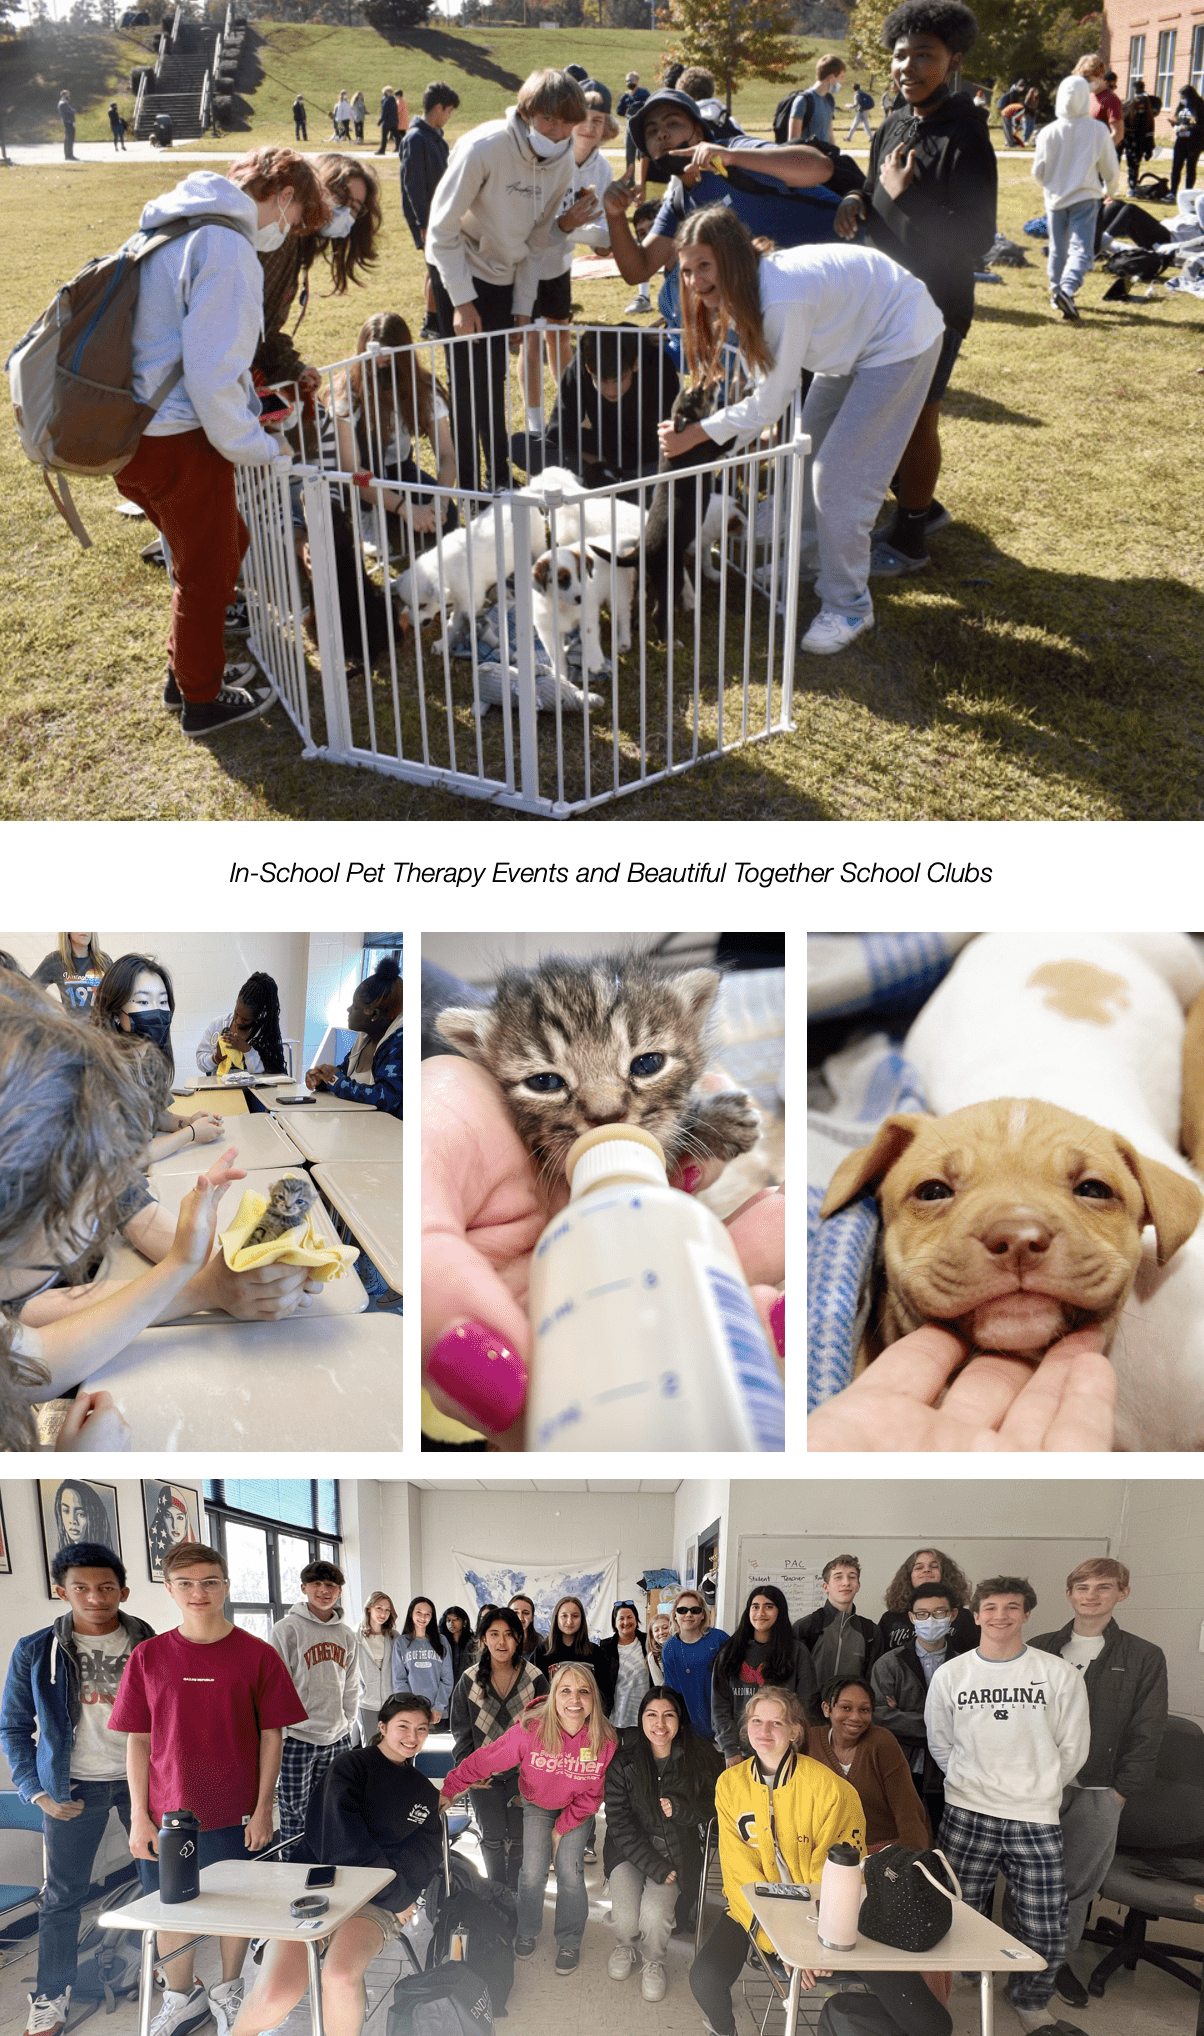 Beautiful Together Animal Sanctuary, Youth Programs, Chapel Hill Carrboro School System, North Carolina